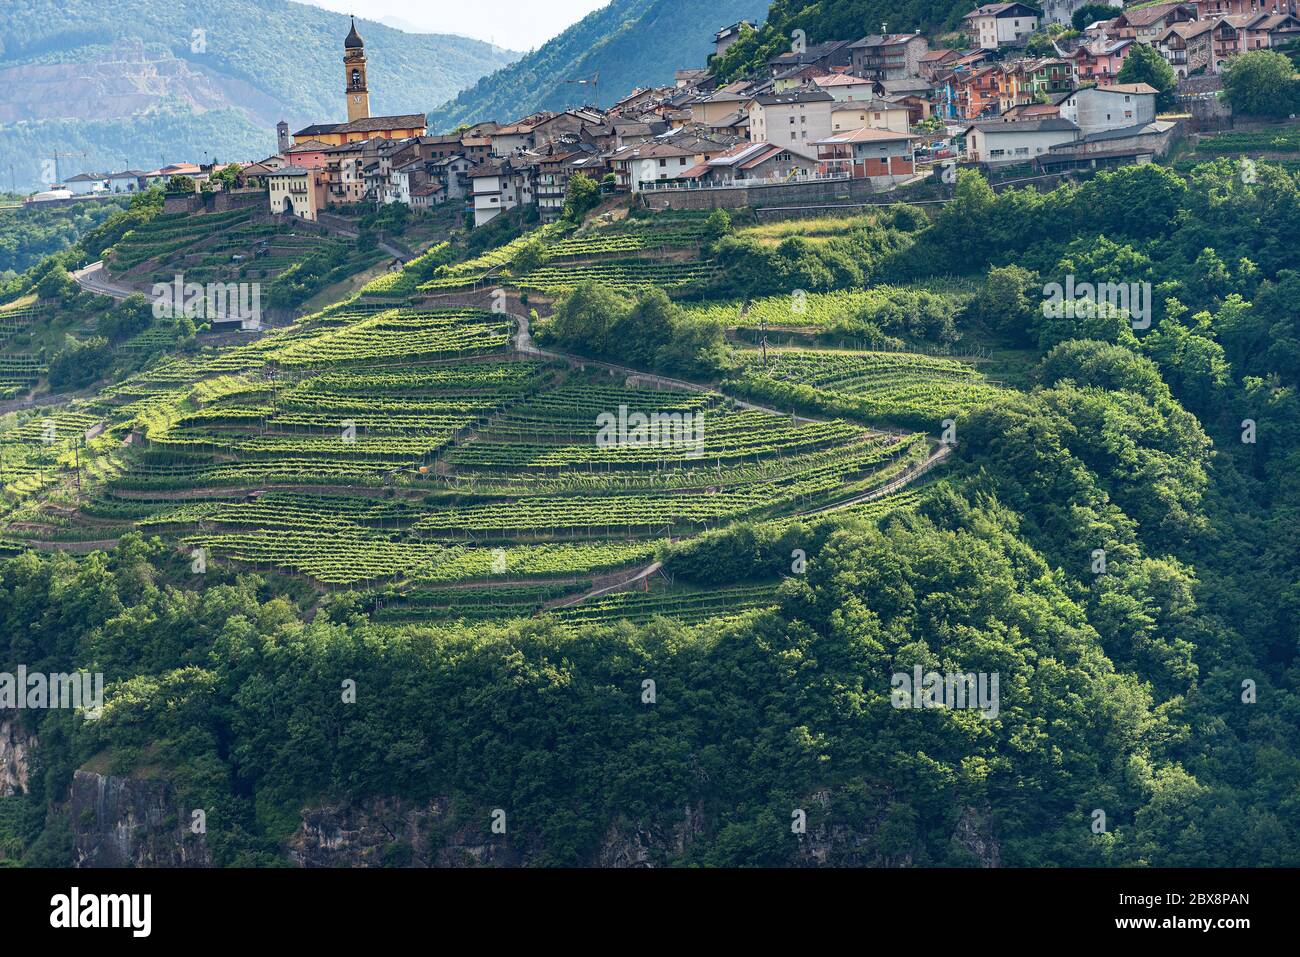 Small village of Faver, famous for wine production. Italian Alps, Cembra valley, Trento Province, Trentino Alto Adige, Italy, Europe Stock Photo